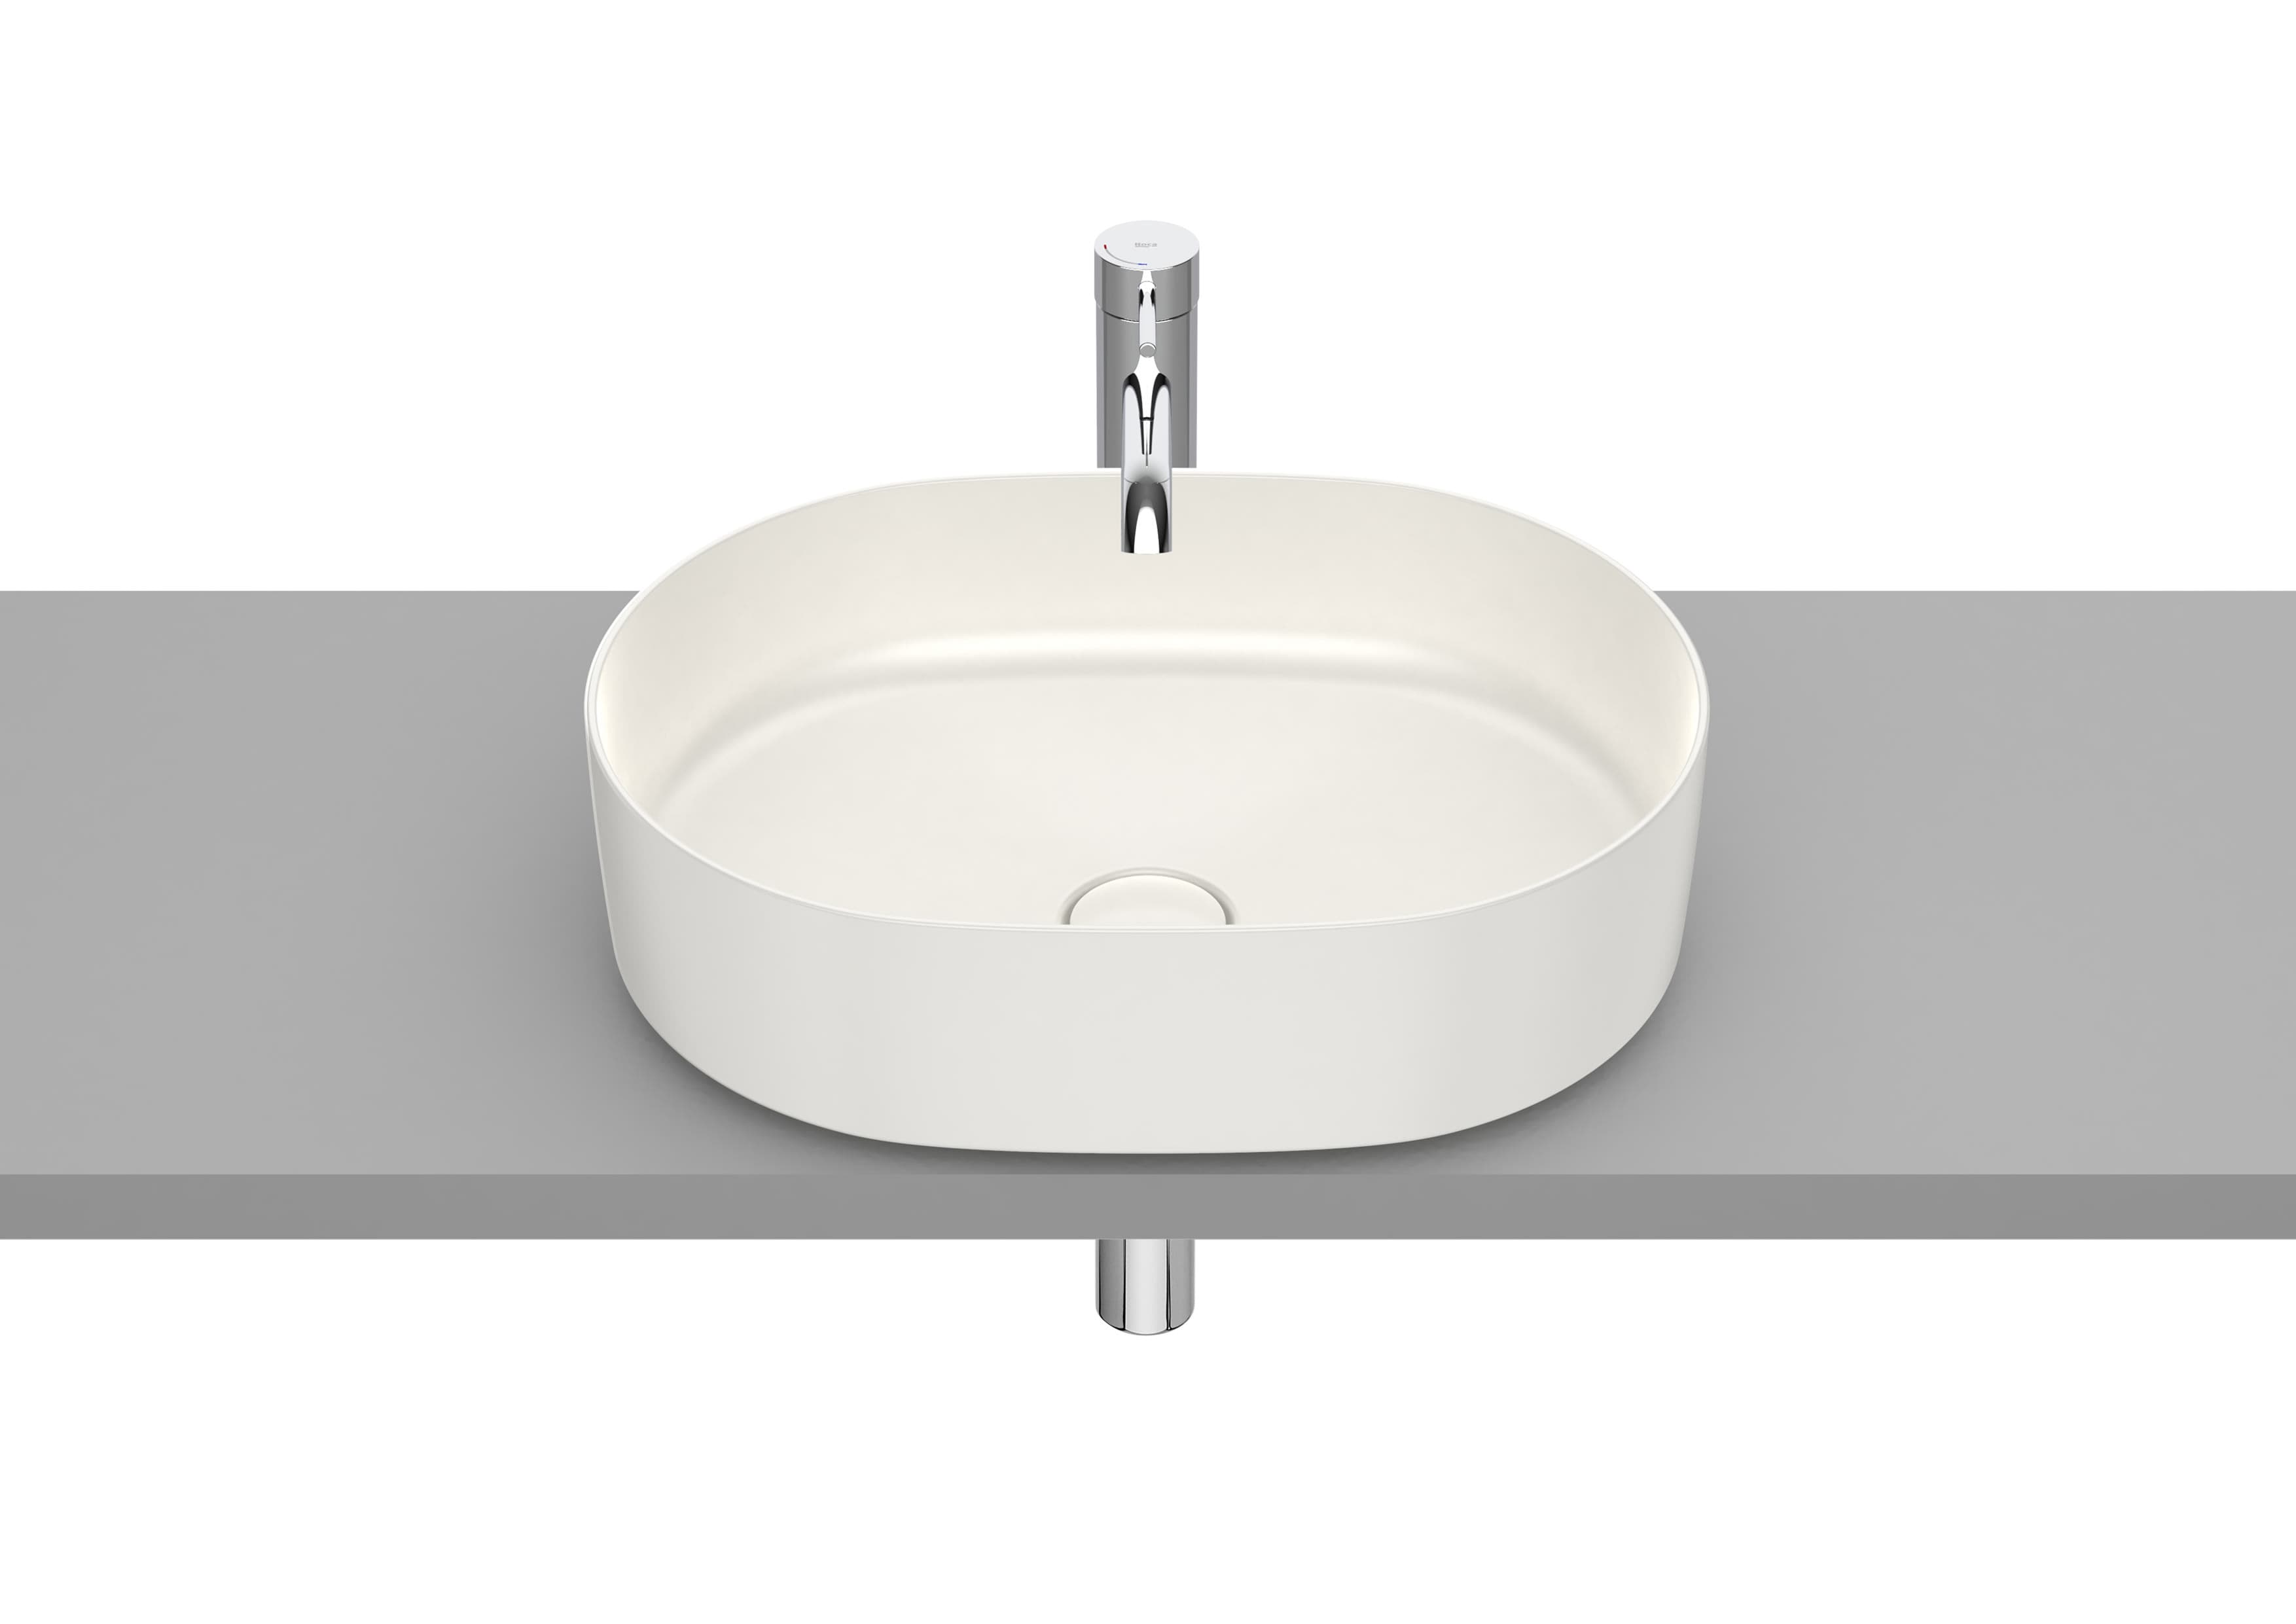 Sanitaire Lavabos INSPIRA A327520000 Vasque à poser rectangulaire Round en FINECERAMIC® Bonde de vidage céramique incluse. Sans trop-plein Roca 5 - Mirage ceramica